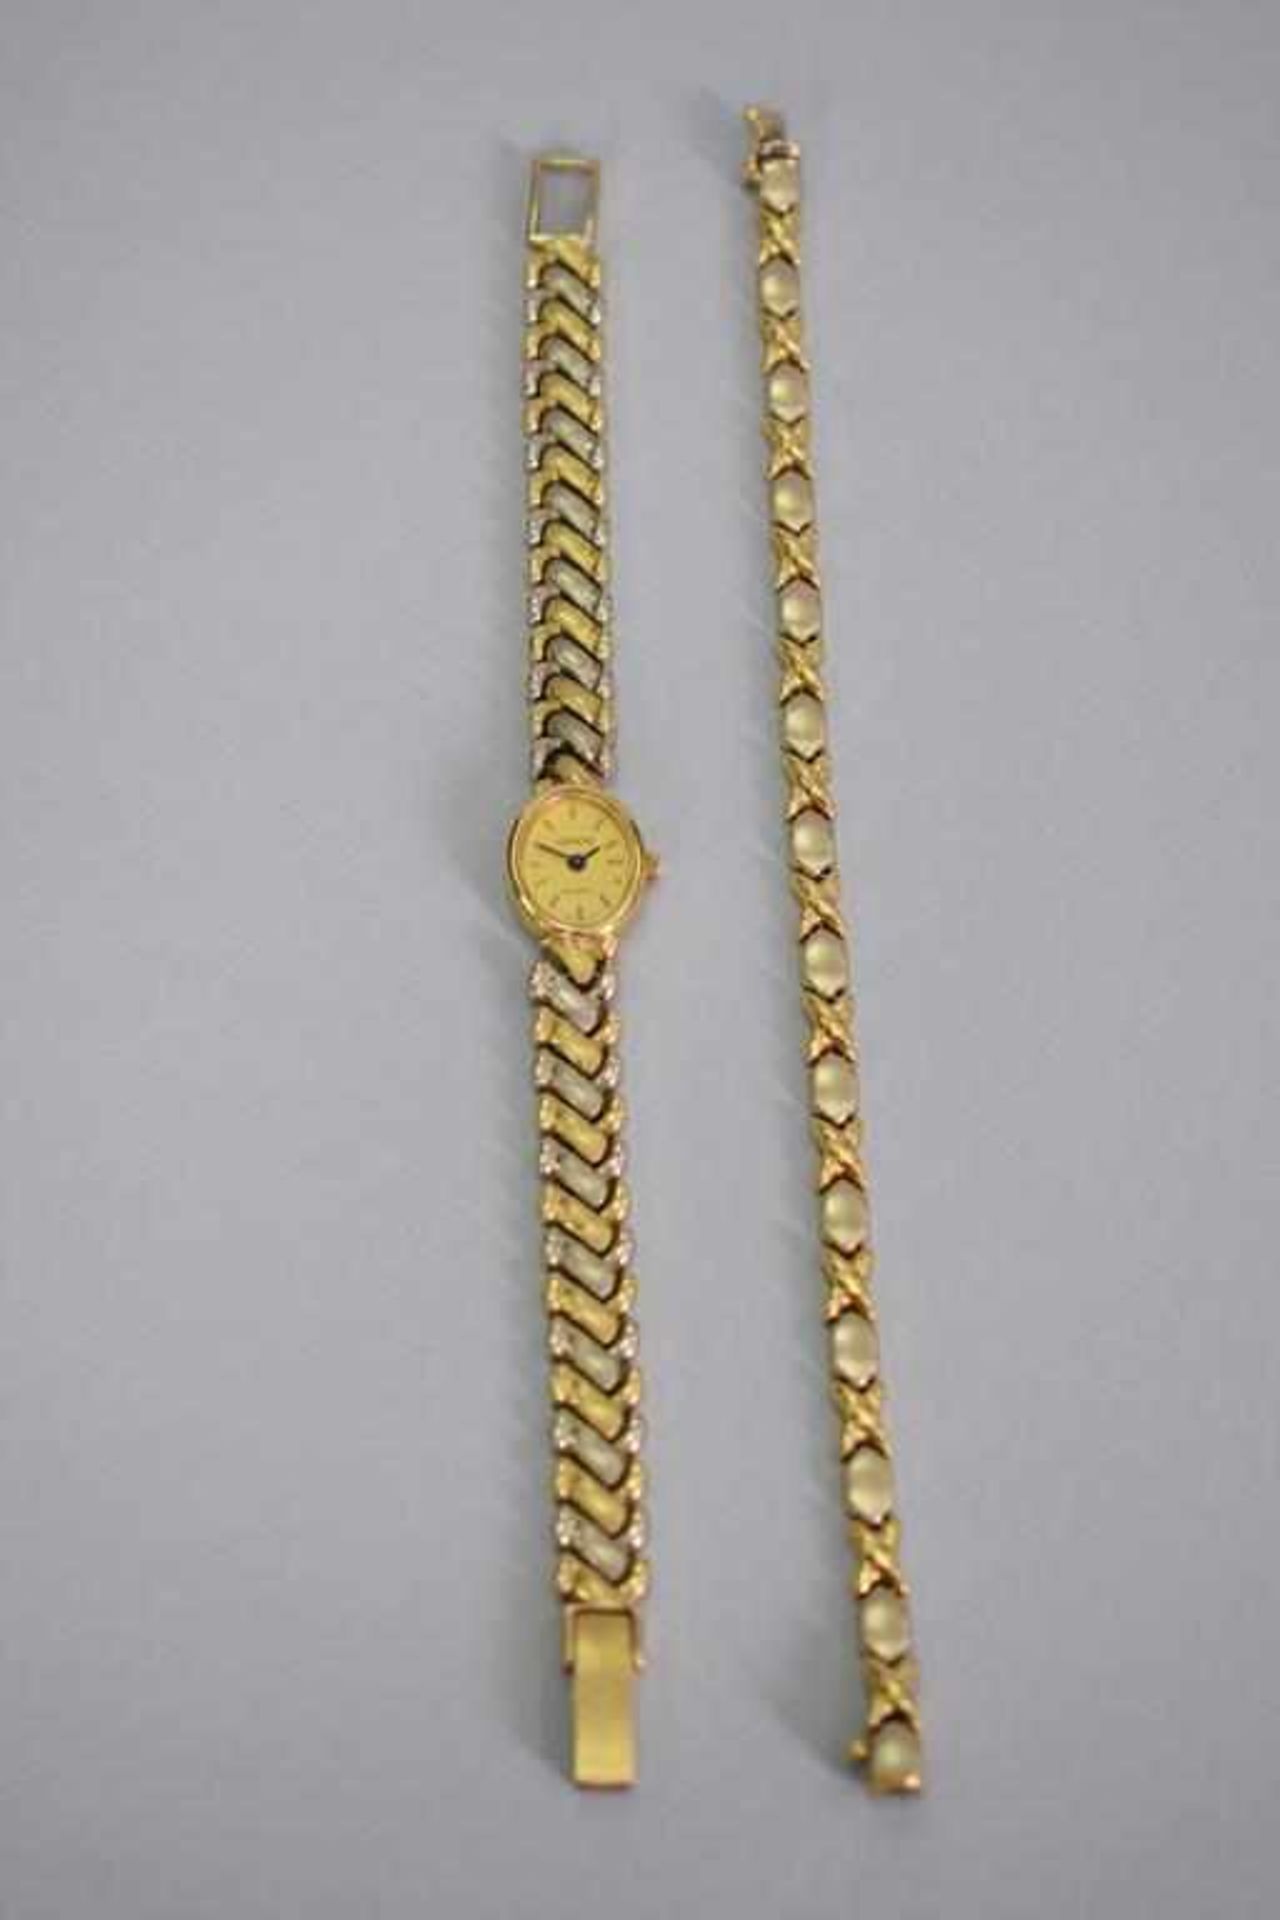 Konvolut Goldschmuck 750 & 585 ca. 27,5 gr.Material: 750 Gold Armband ca. 10 gr.Maße: 18,5 cm x 0,